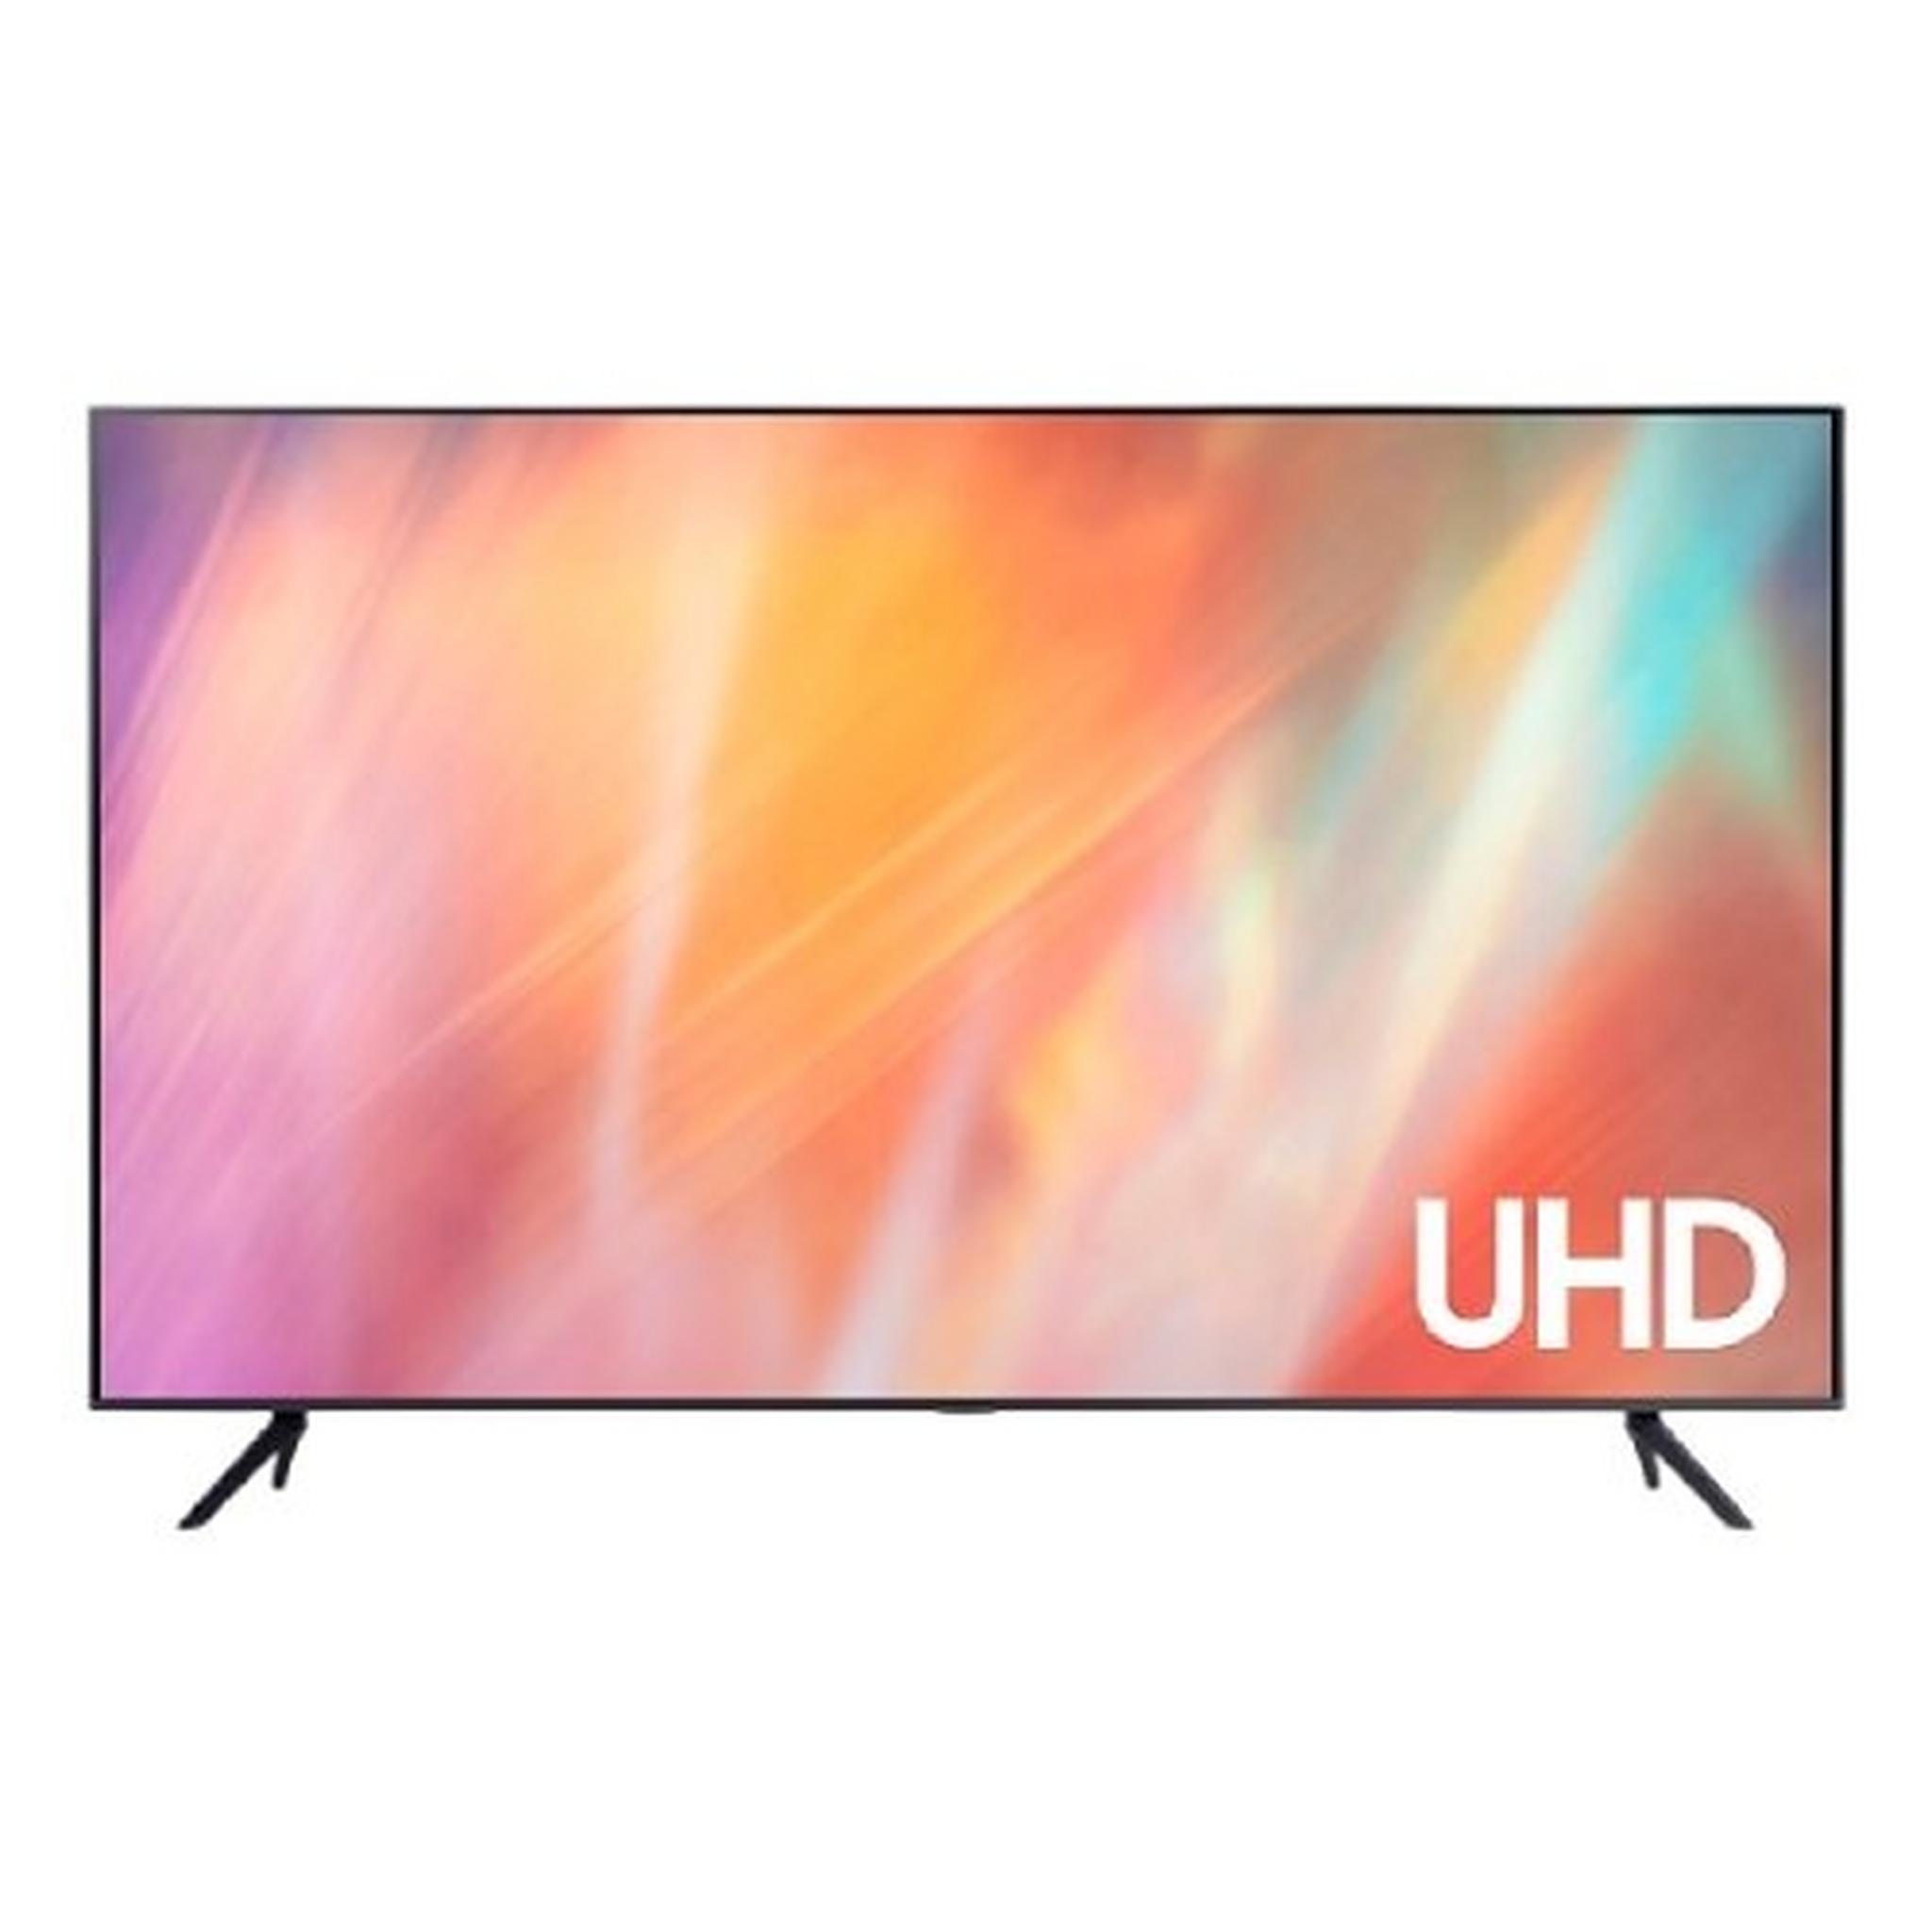 Samsung Series AU7000 55-inch UHD Smart LED TV (UA55AU7000)